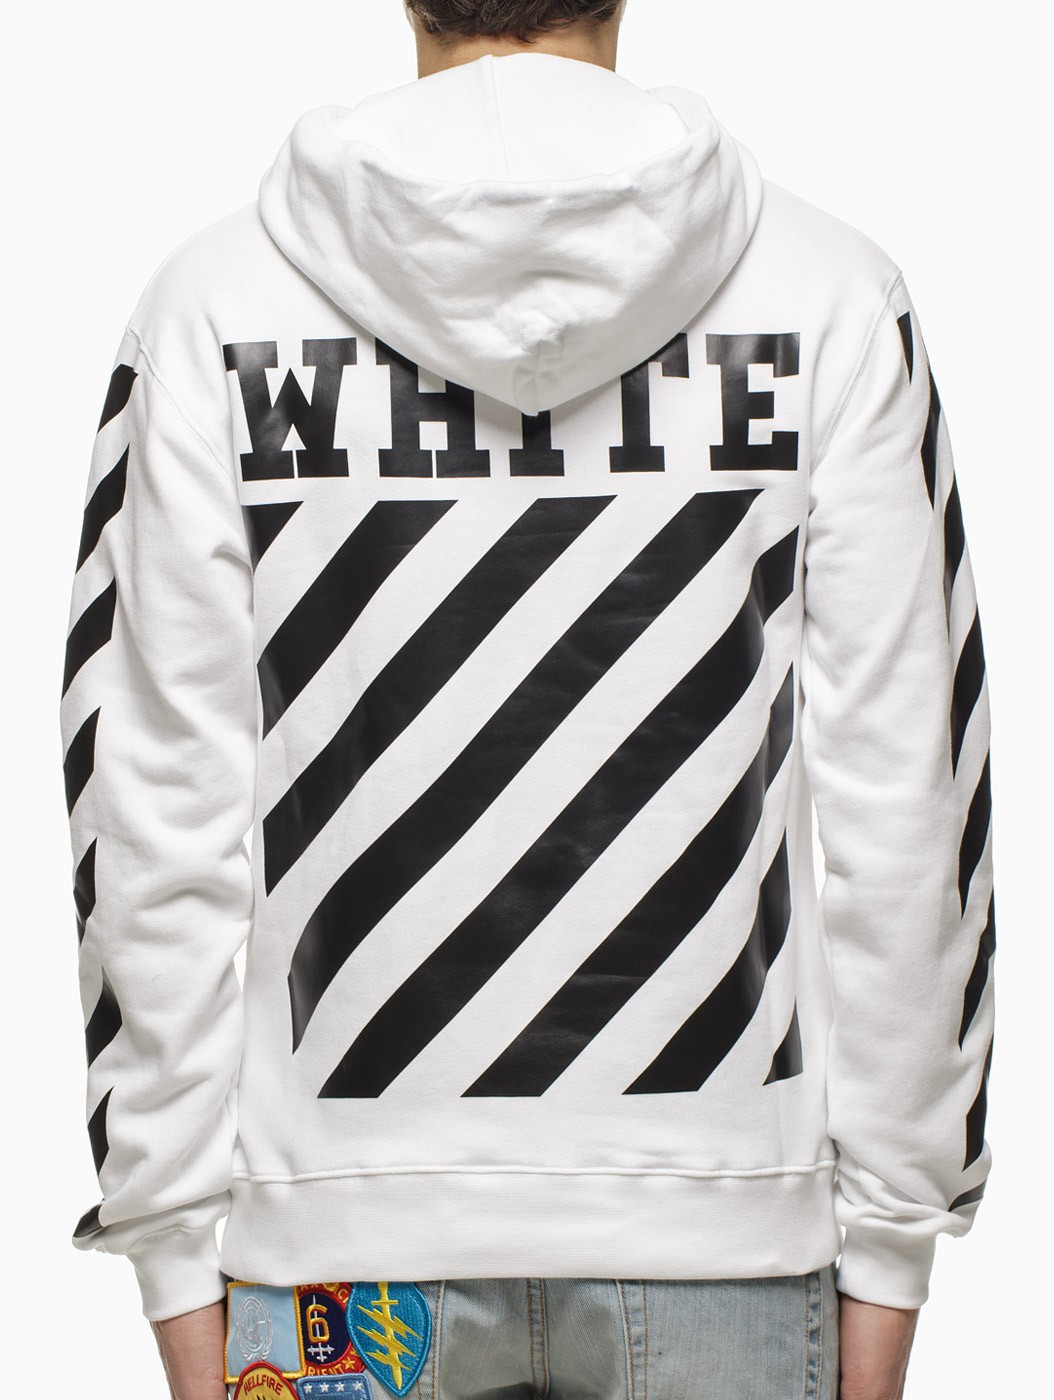 Off-White c/o Virgil Abloh “Caravaggio” Sweatshirt in White for Men - Lyst1054 x 1400